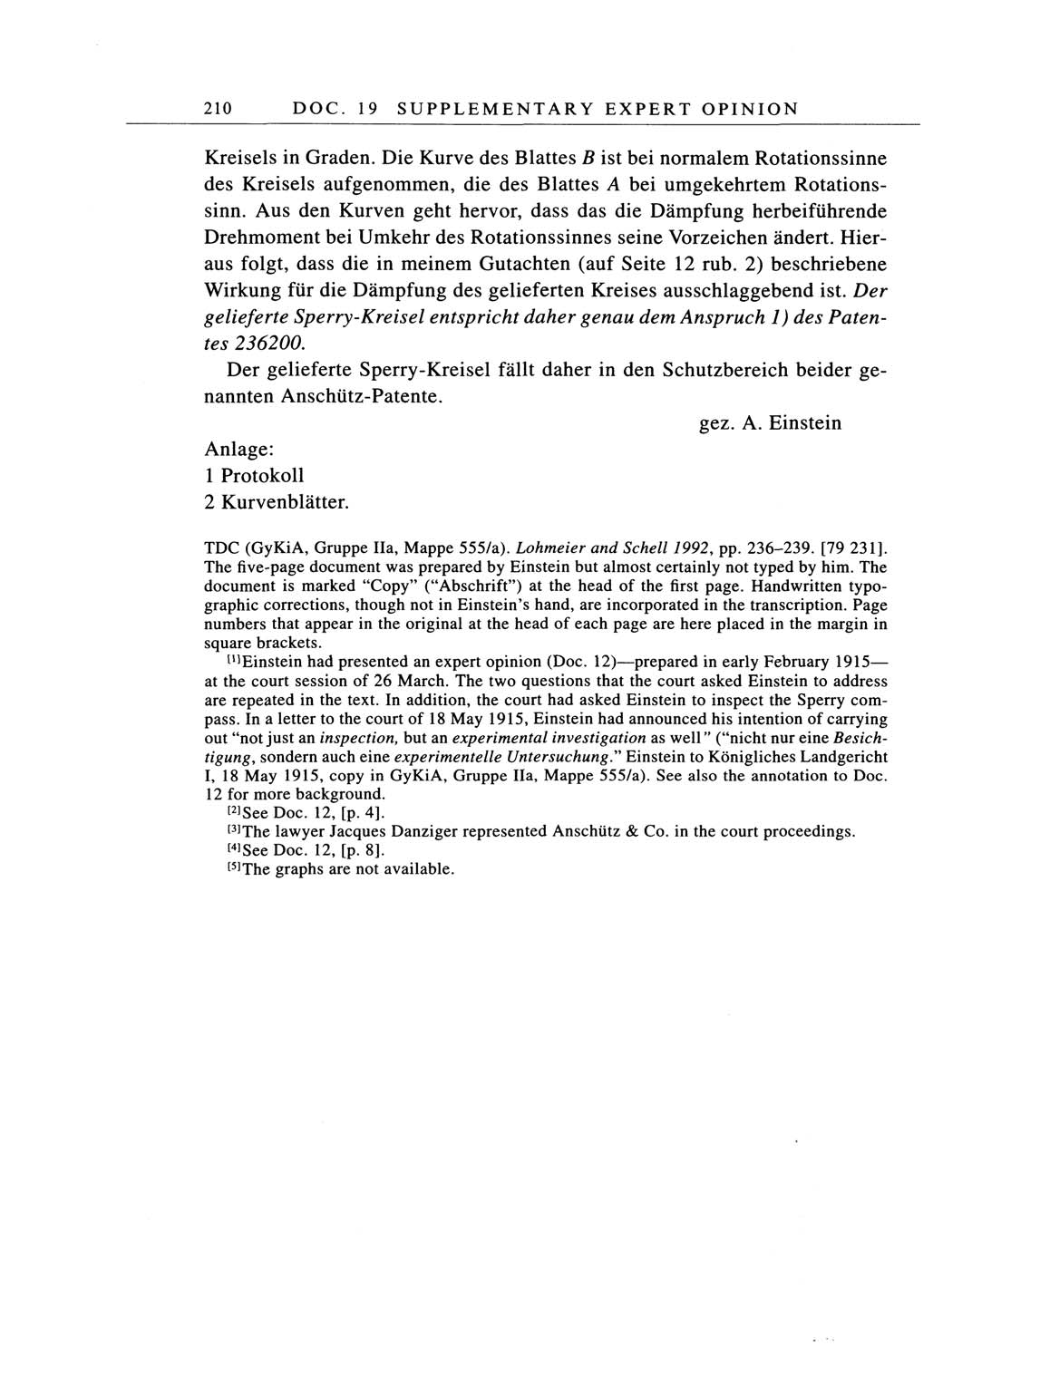 Volume 6: The Berlin Years: Writings, 1914-1917 page 210